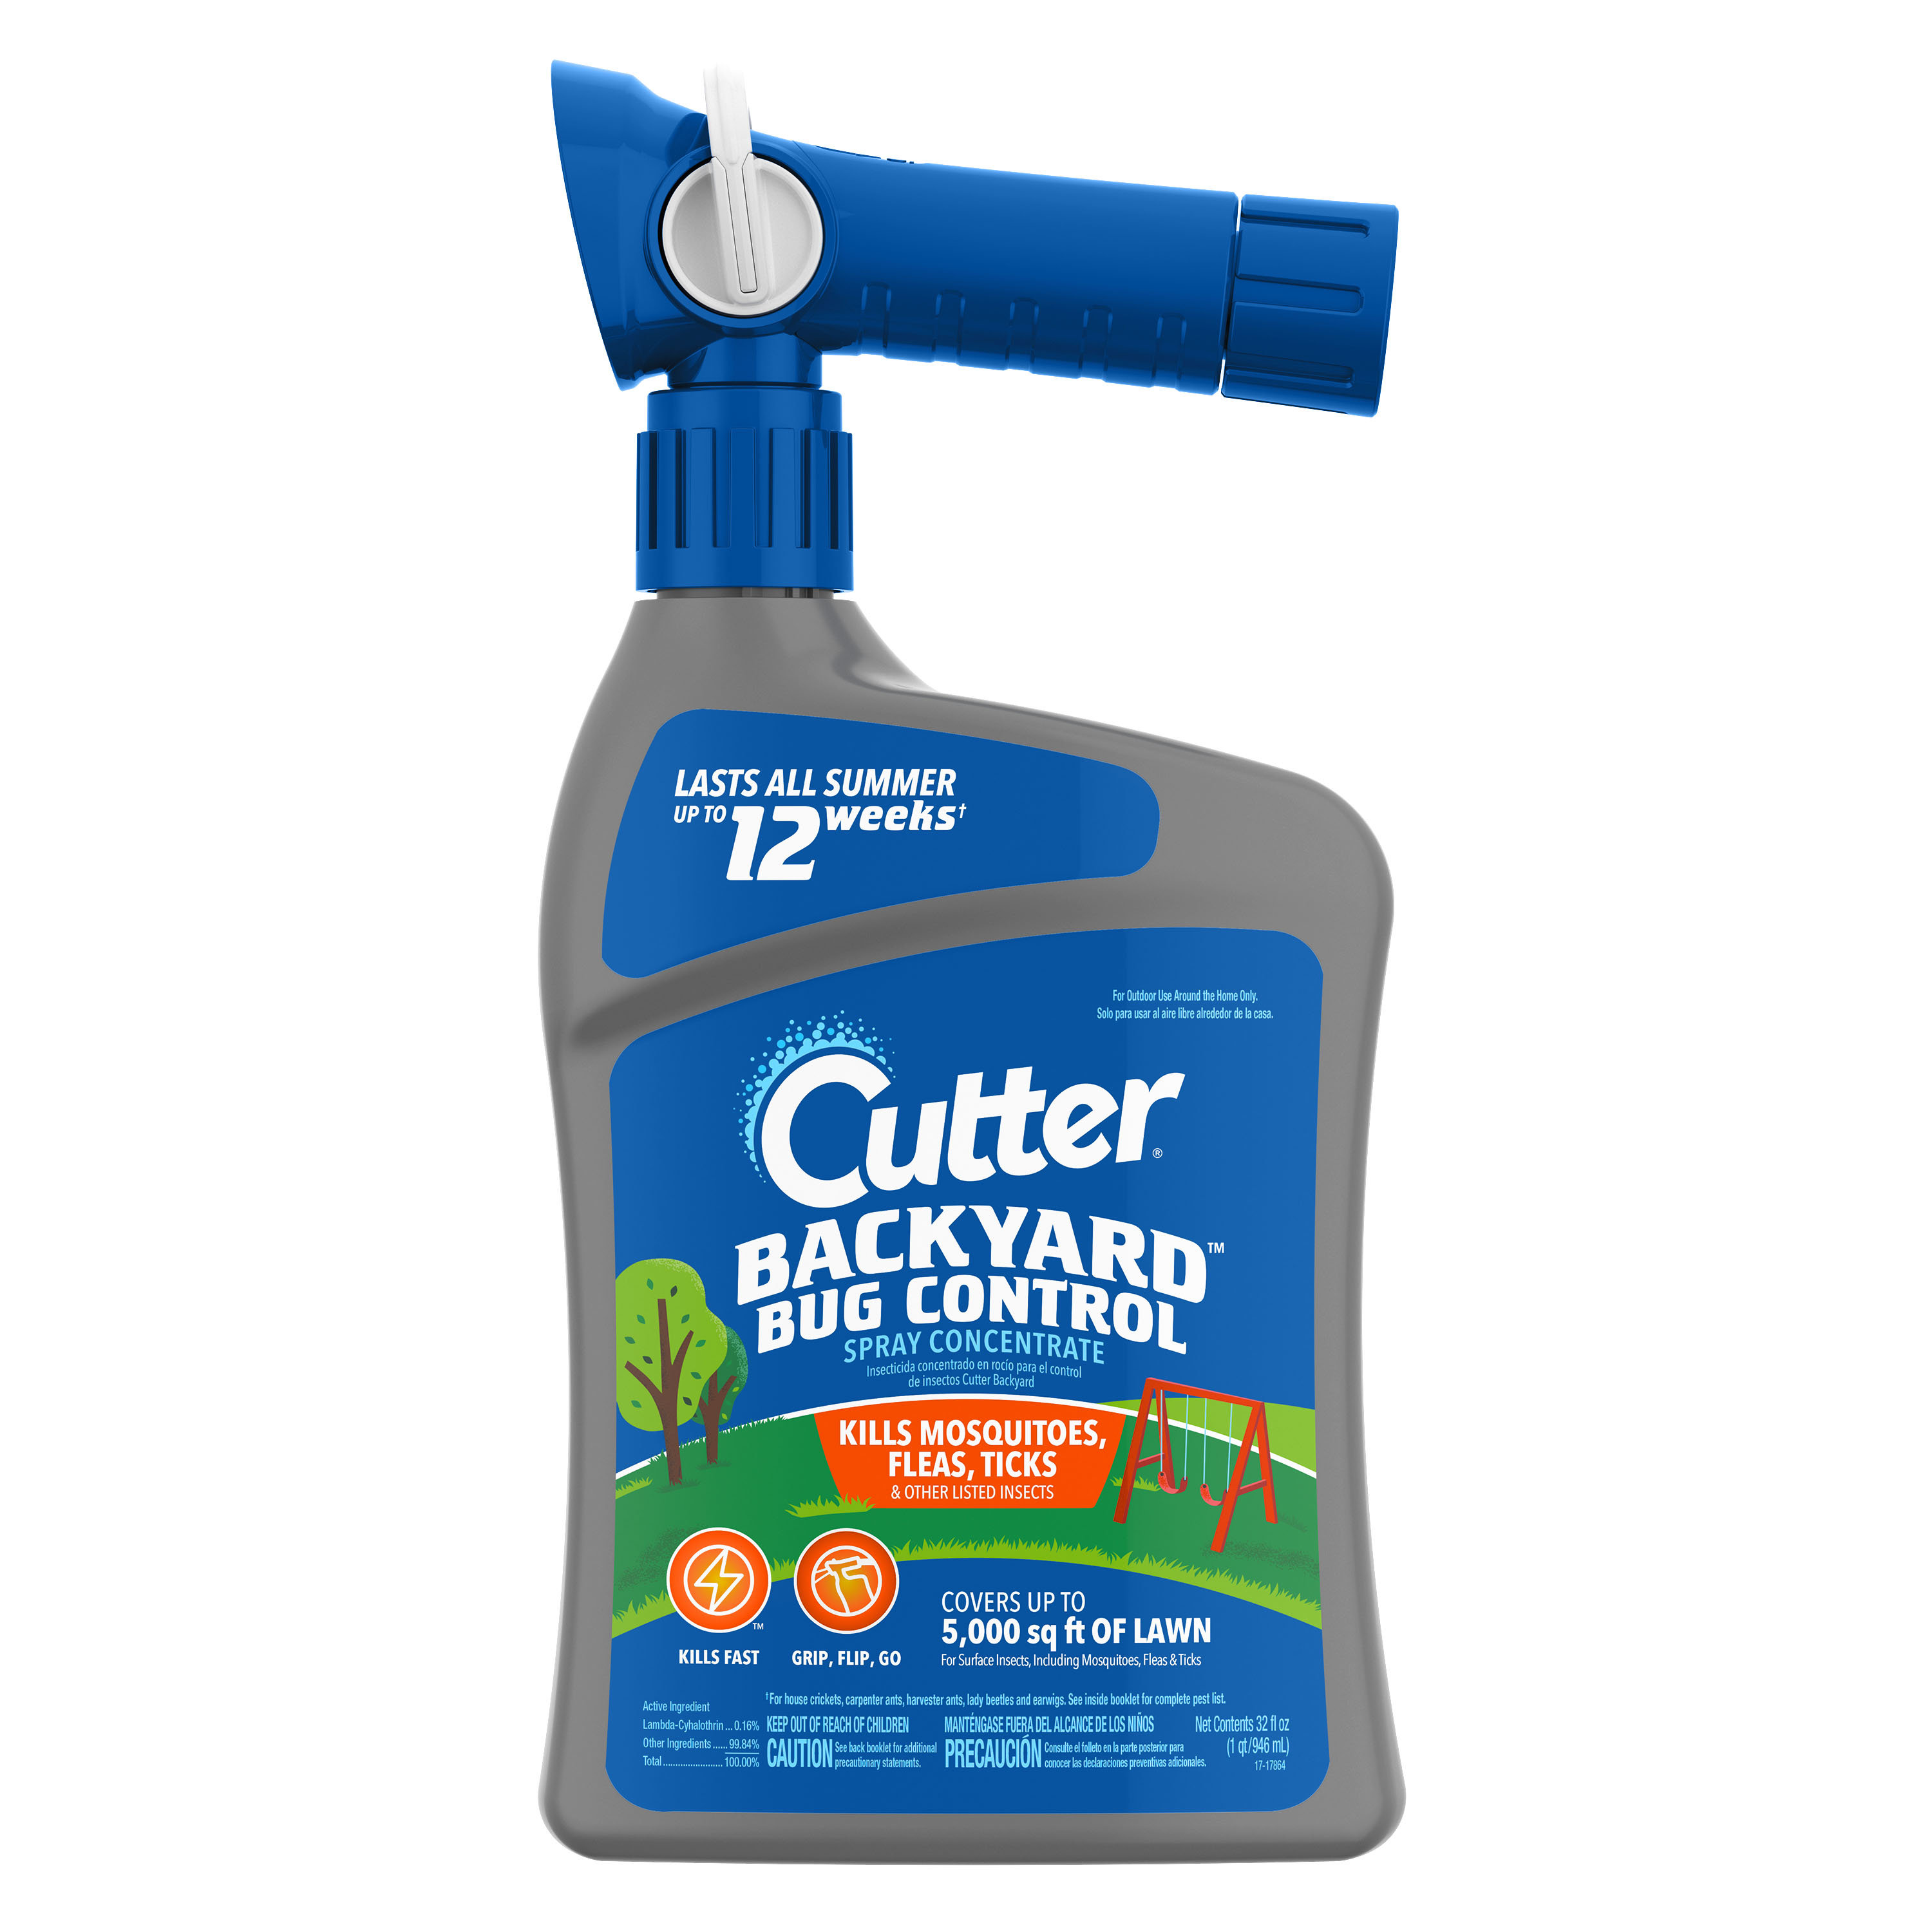 Clean Earth Earthworm Family Safe Drain Cleaner - 32 fl oz jug